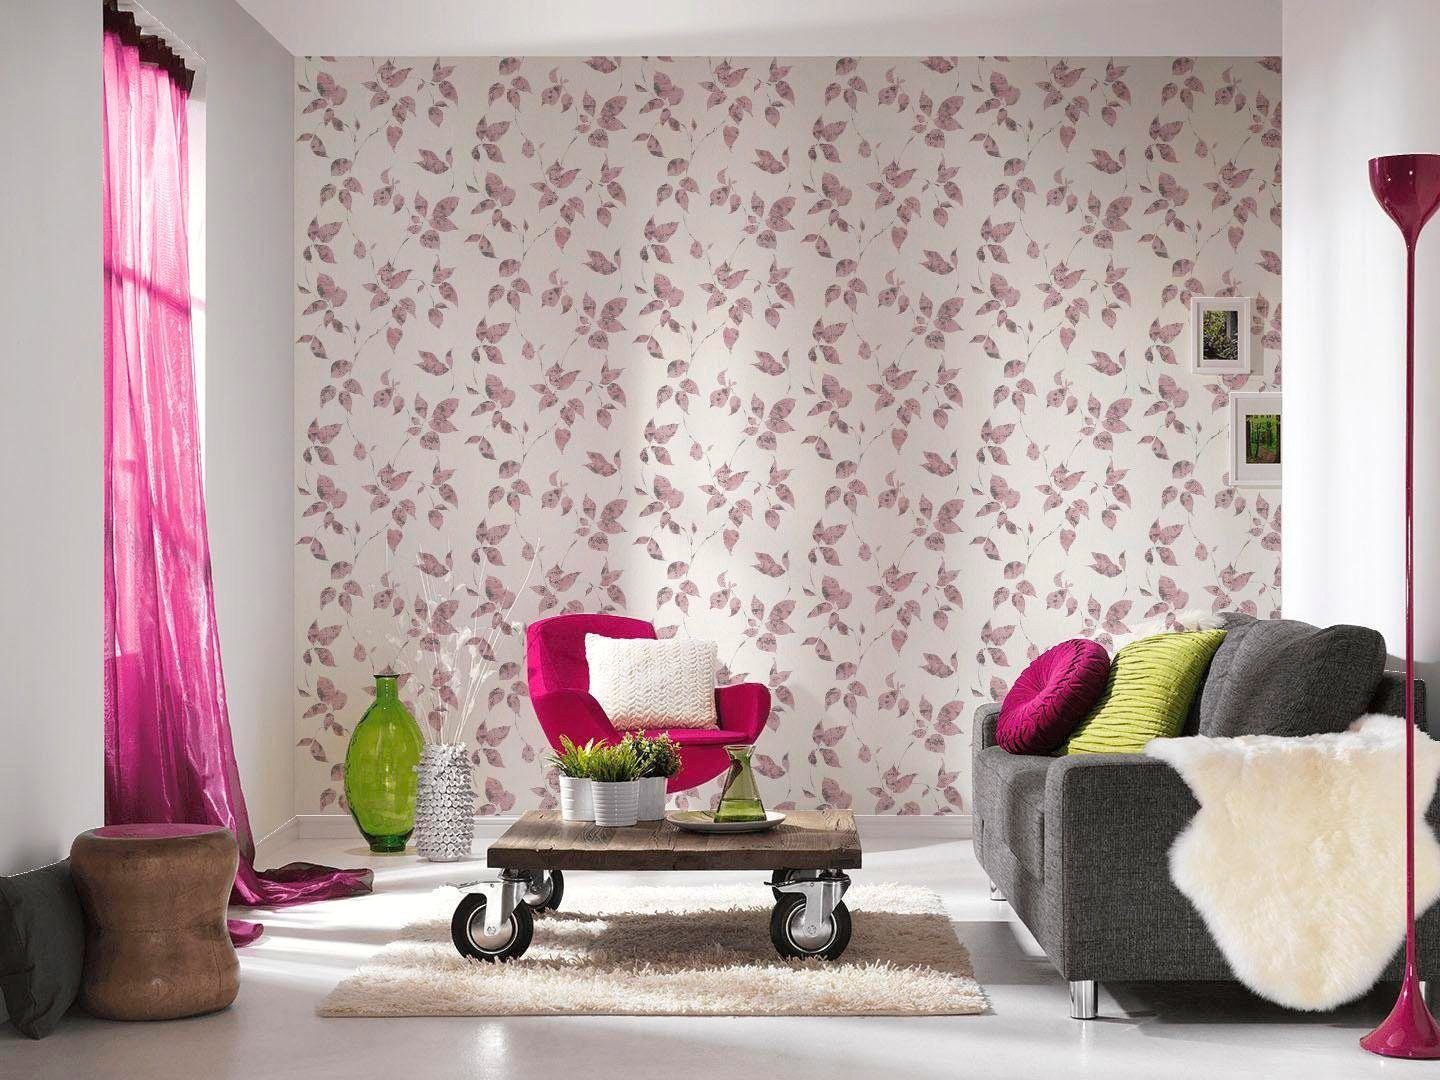 A.S. Création walls Tapete Blumen floral, living Landhaus geblümt, rosa/grau/weiß Flavour, Vliestapete